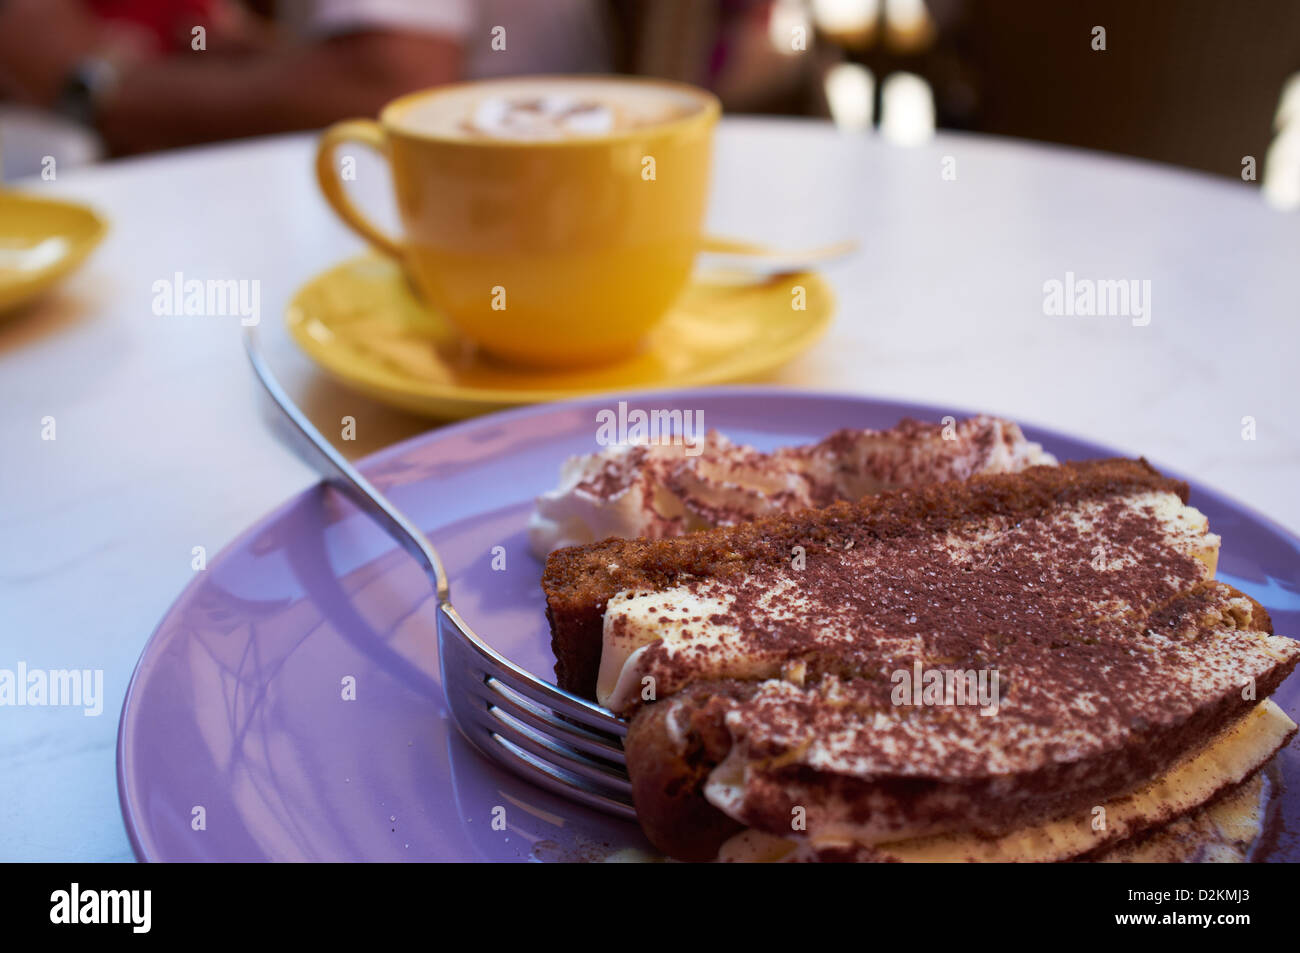 Kaffee und Tiramisu mit Kakaopulver bestreut Stockfoto